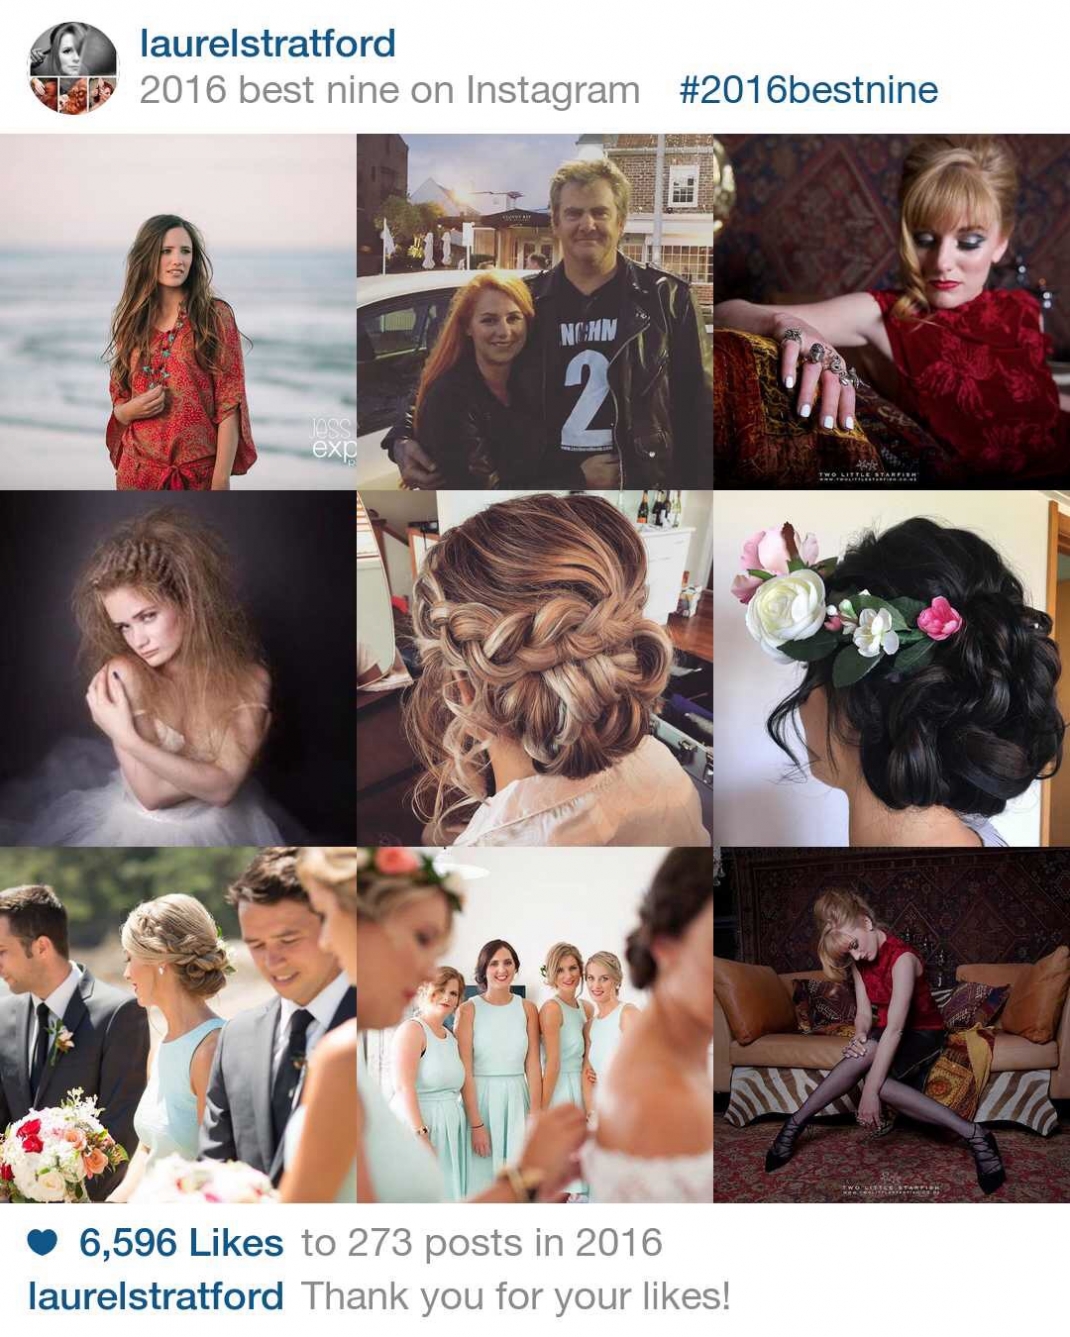 Best nine Instagram images 2016 laurel Stratford hairstylist, editorial images, wedding hair bridesmaids hairstyles brides hair 